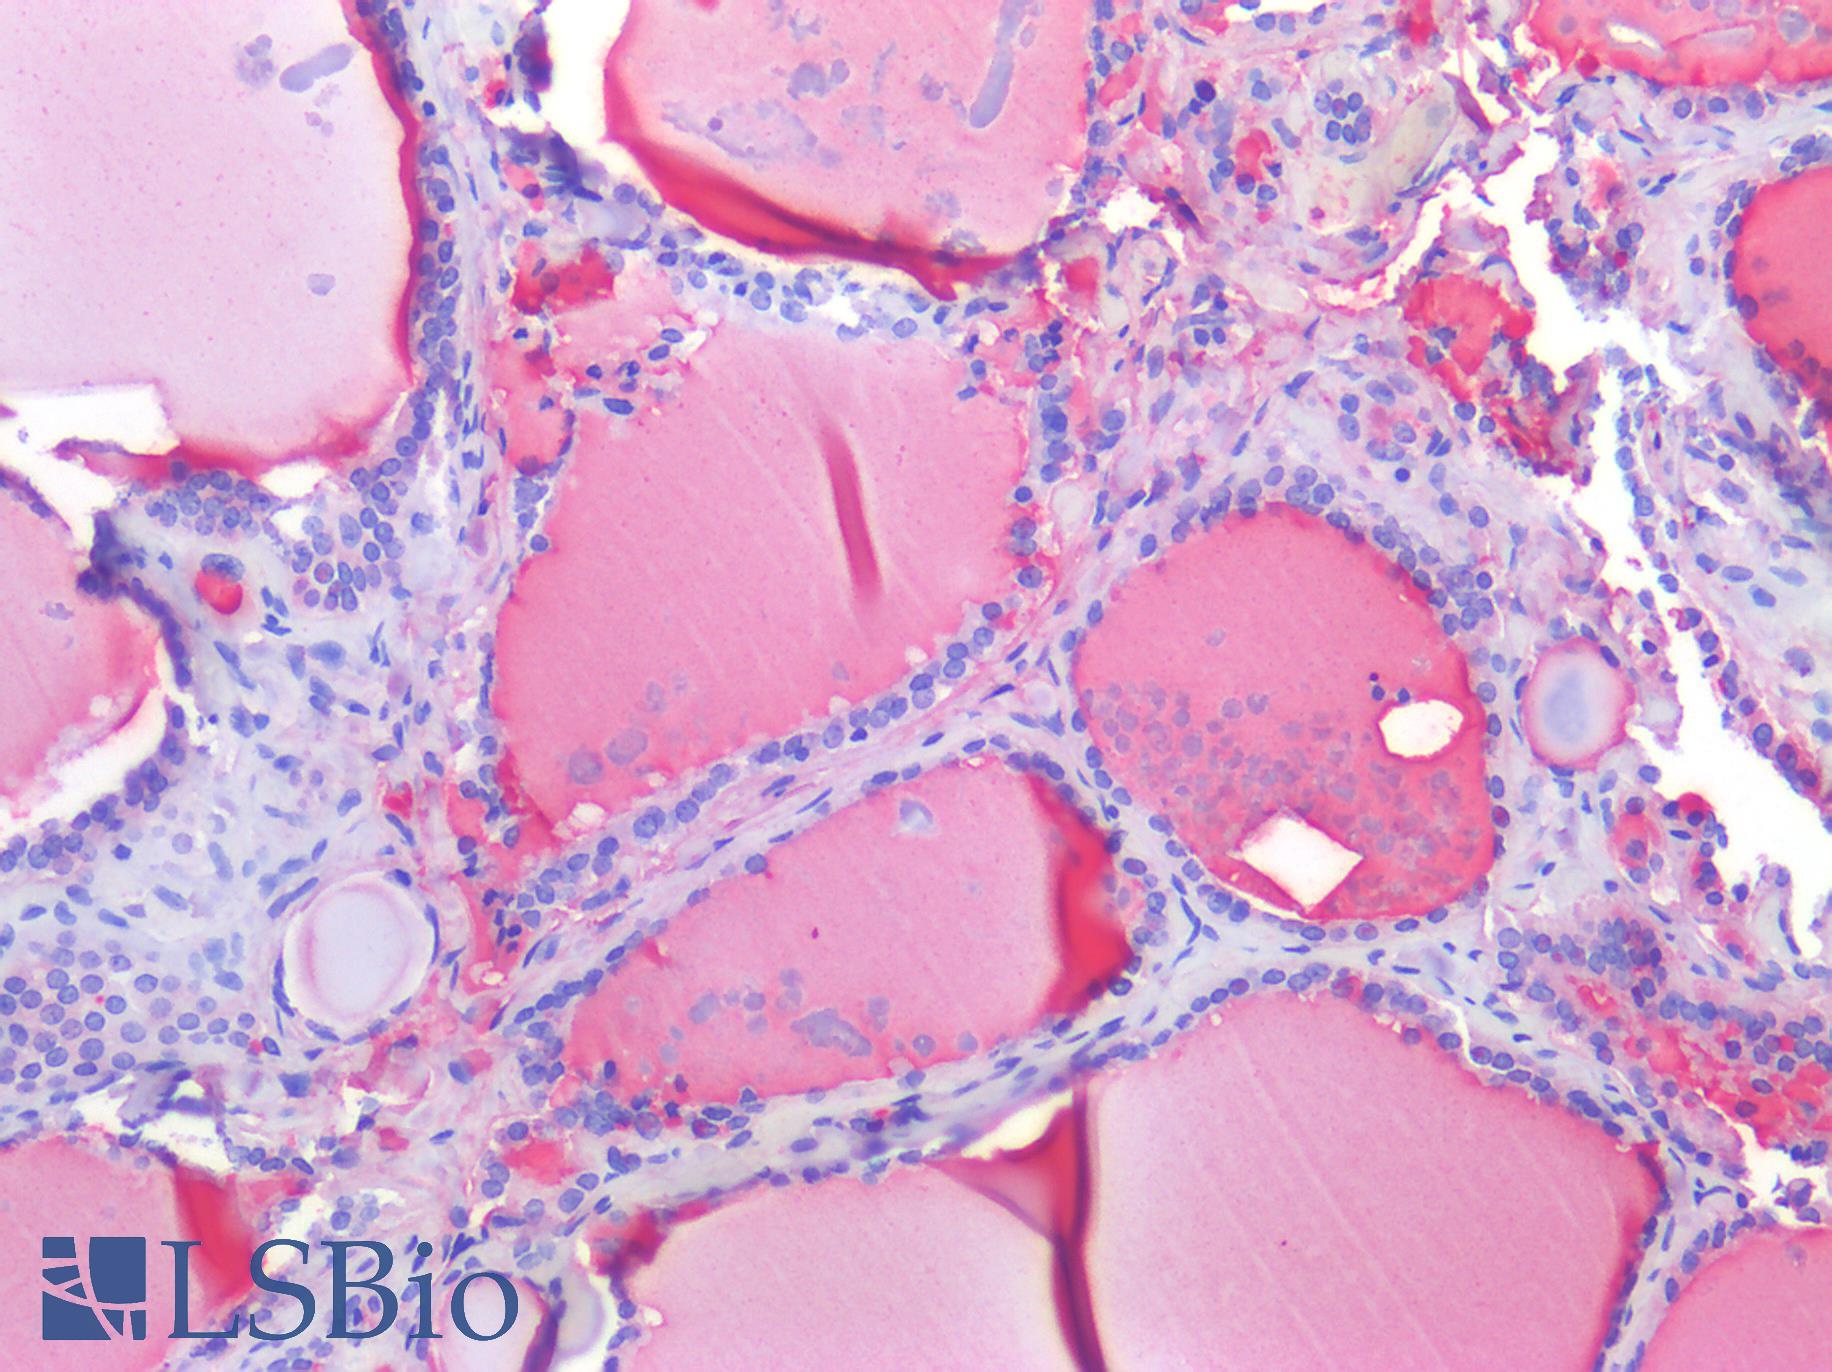 OCLN / Occludin Antibody - Human Thyroid: Formalin-Fixed, Paraffin-Embedded (FFPE)